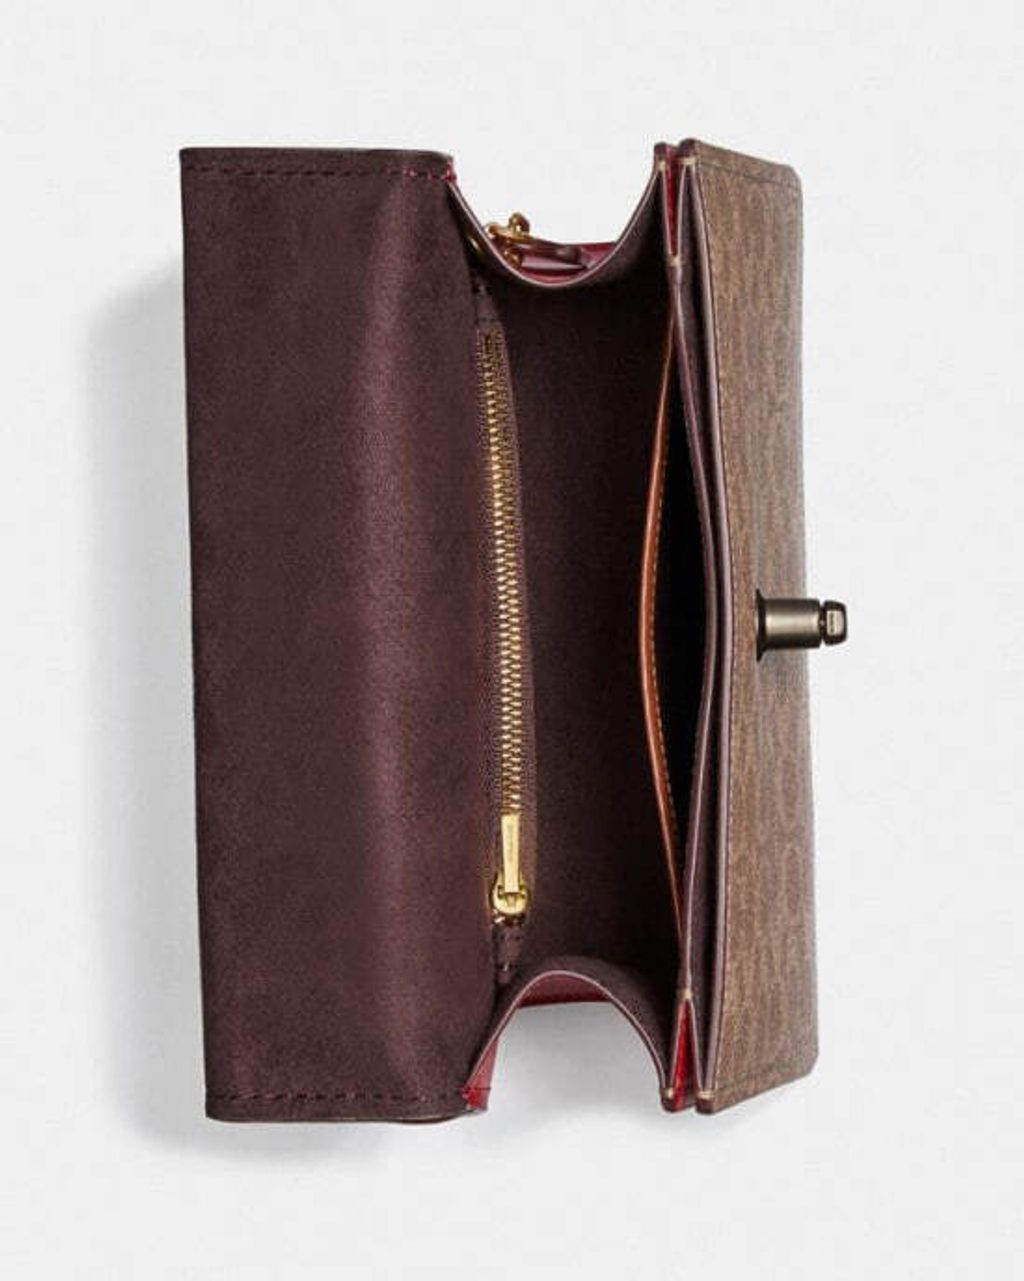 handbag branded coach outlet personalshopper usa malaysia ready stock COACH PARKER TOP HANDLE 4